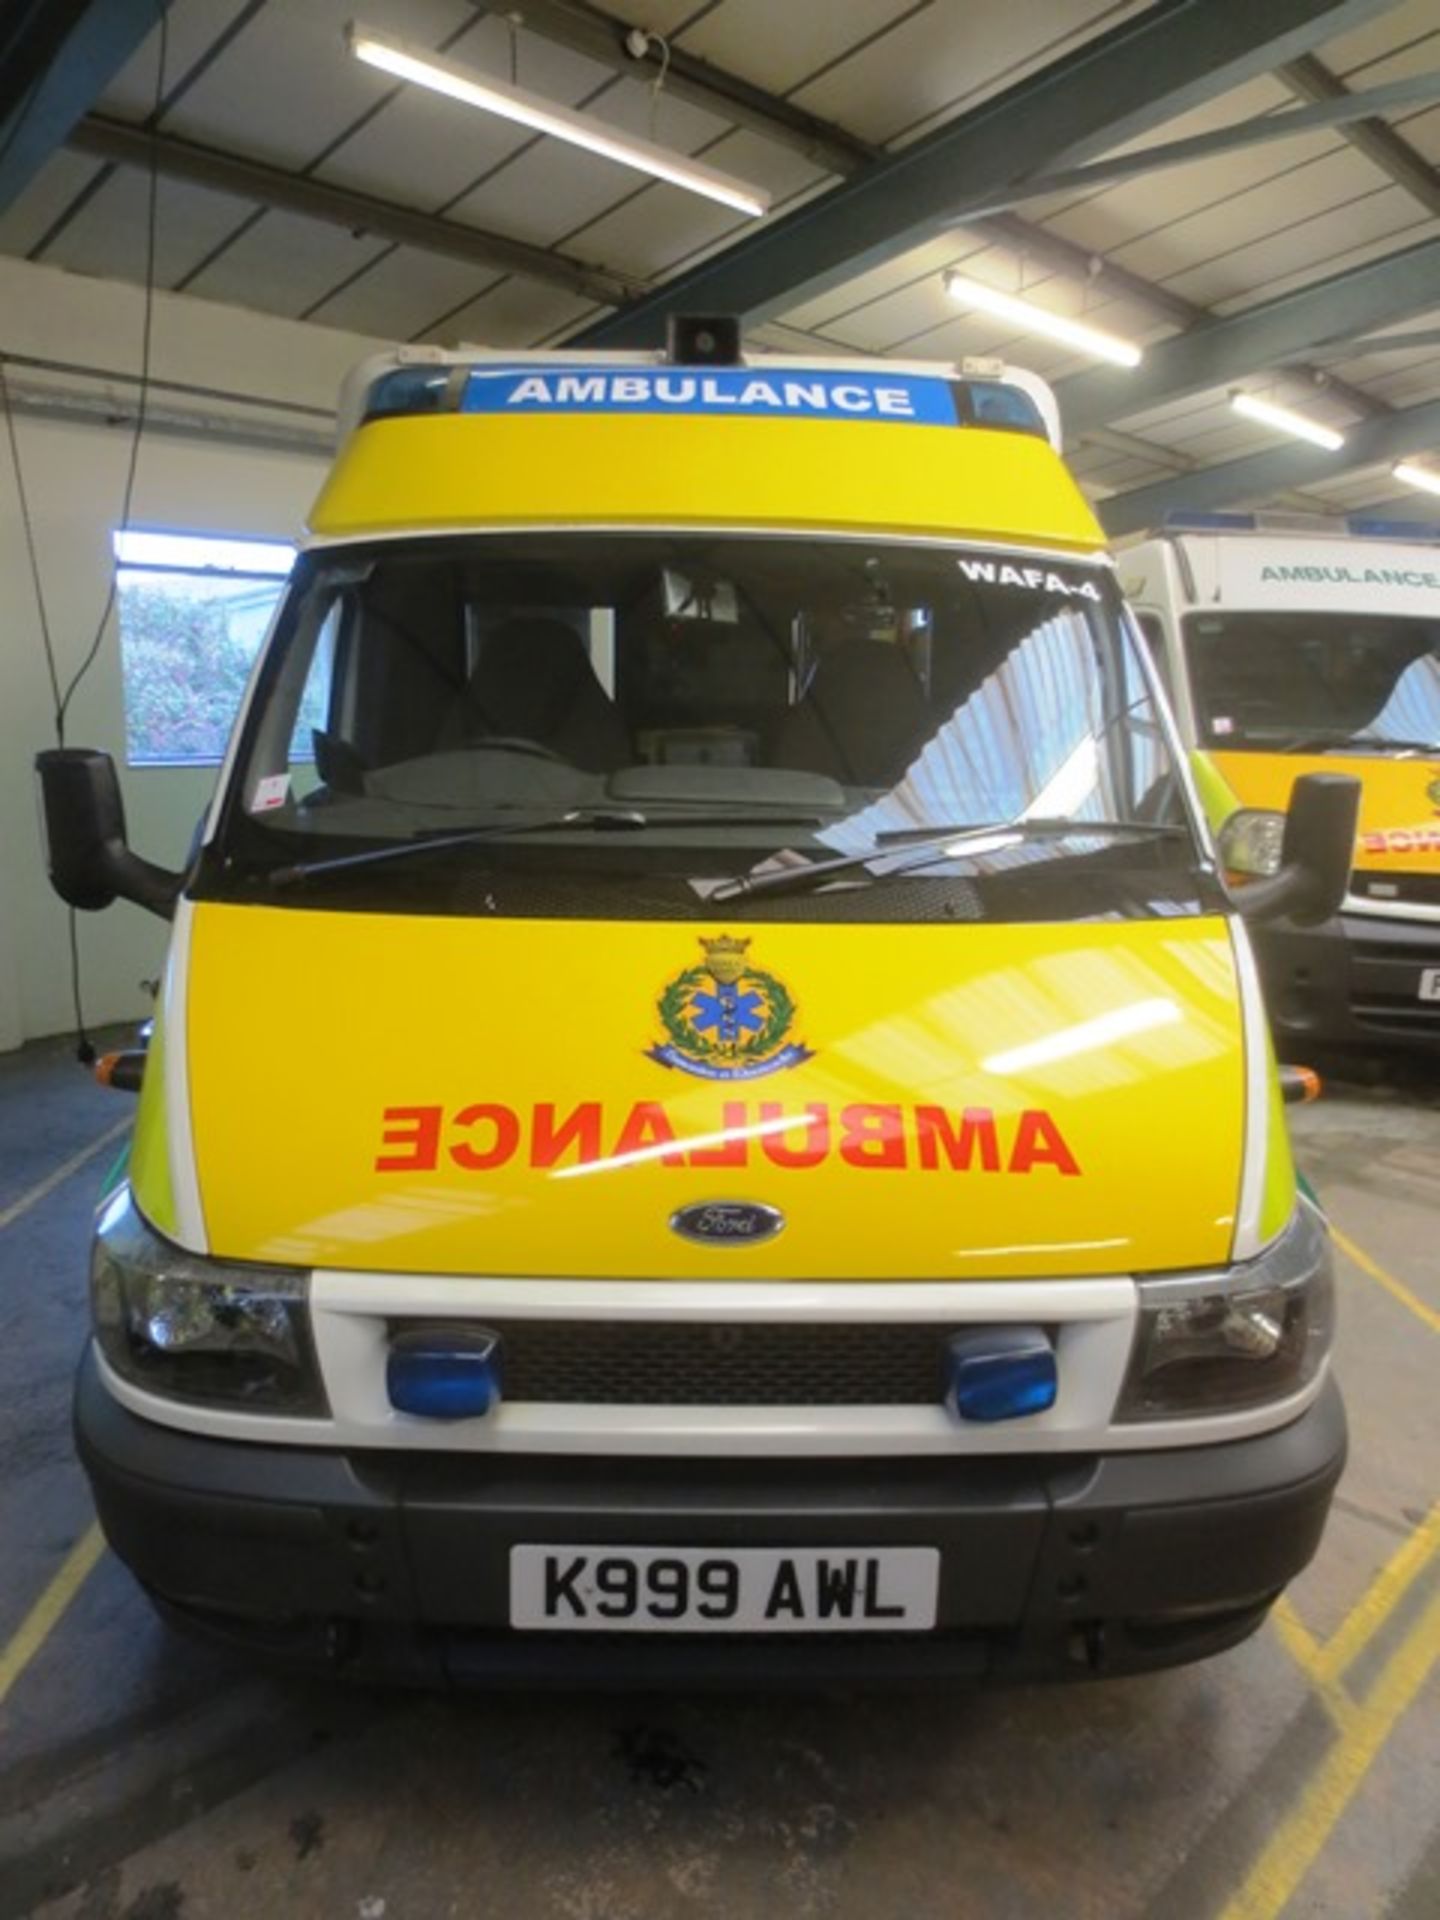 Ford Transit 350 'STV' ambulance, 2402cc diesel, reg no: K999 AWL, MOT: 7/11/17, company ref: Wafa - Image 2 of 15